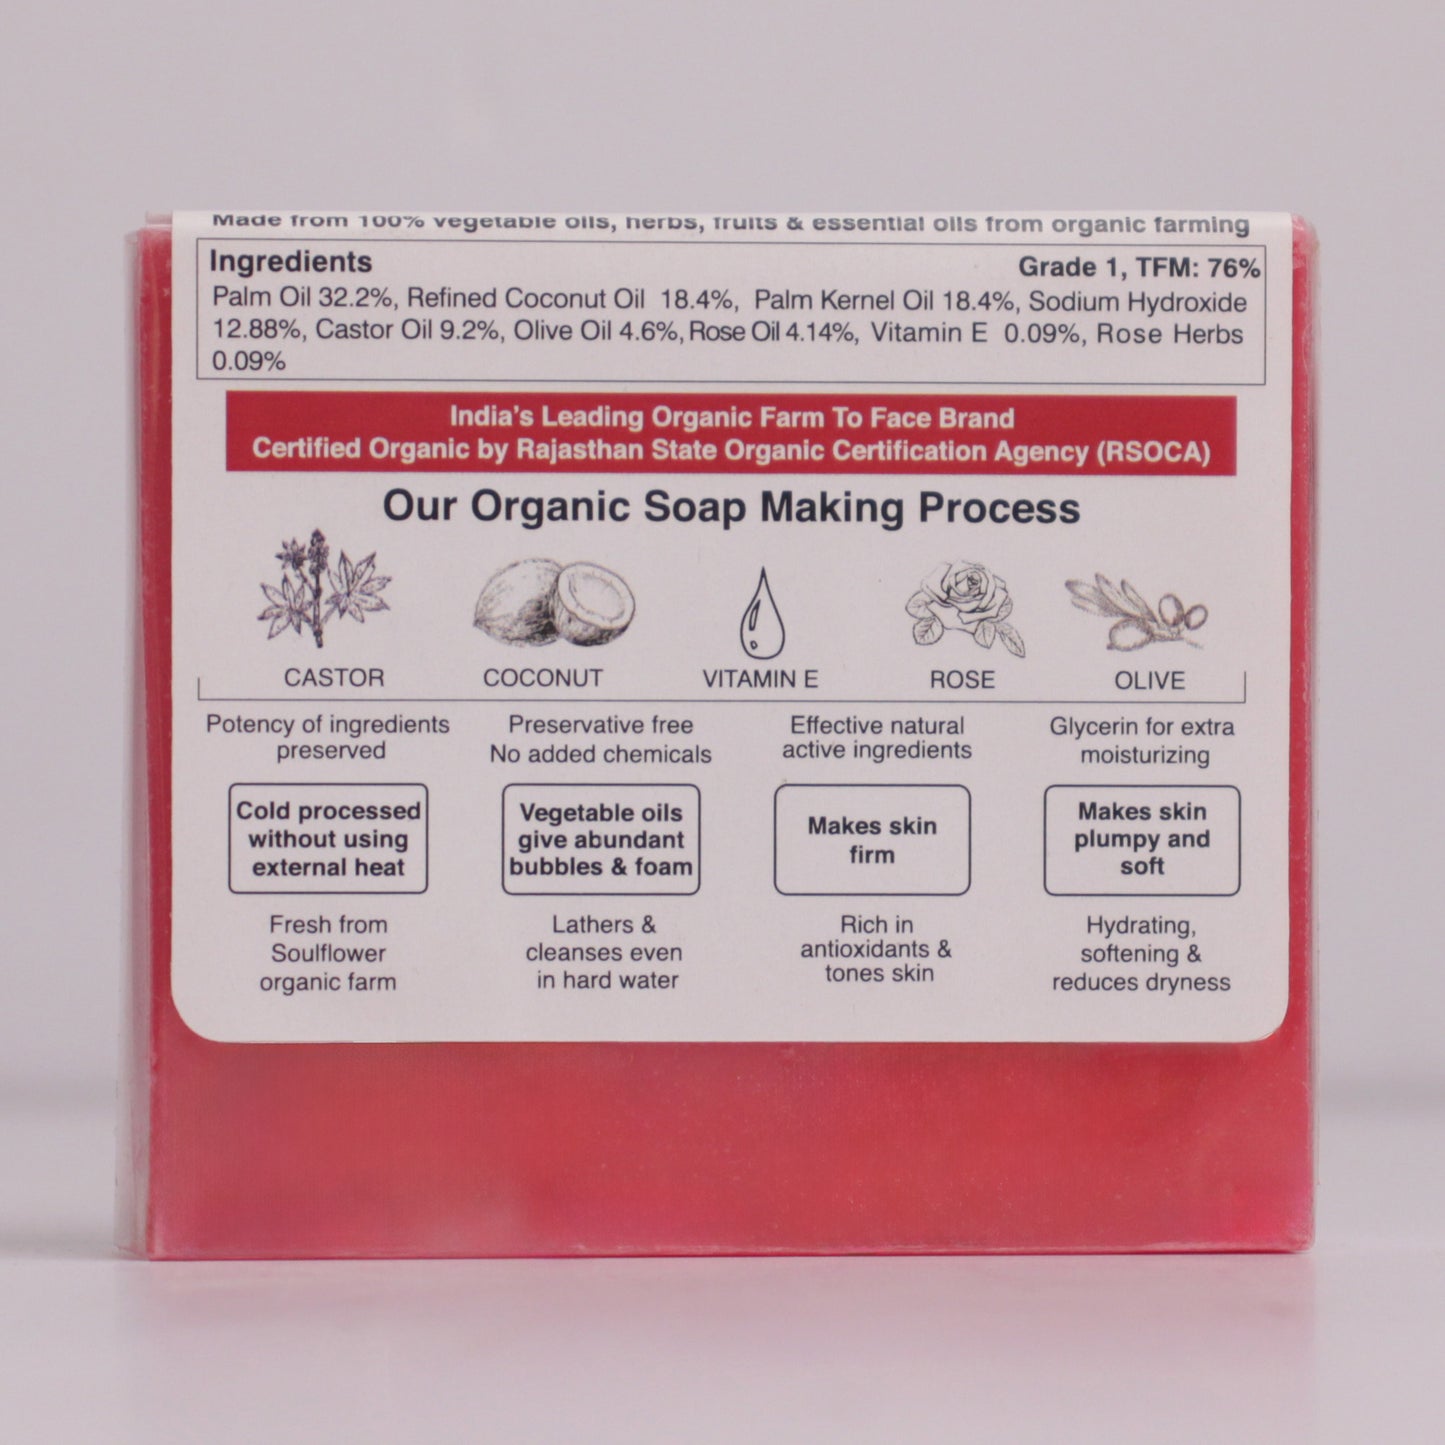 Sweet Rose Natural Soap for Soft & Supple Skin